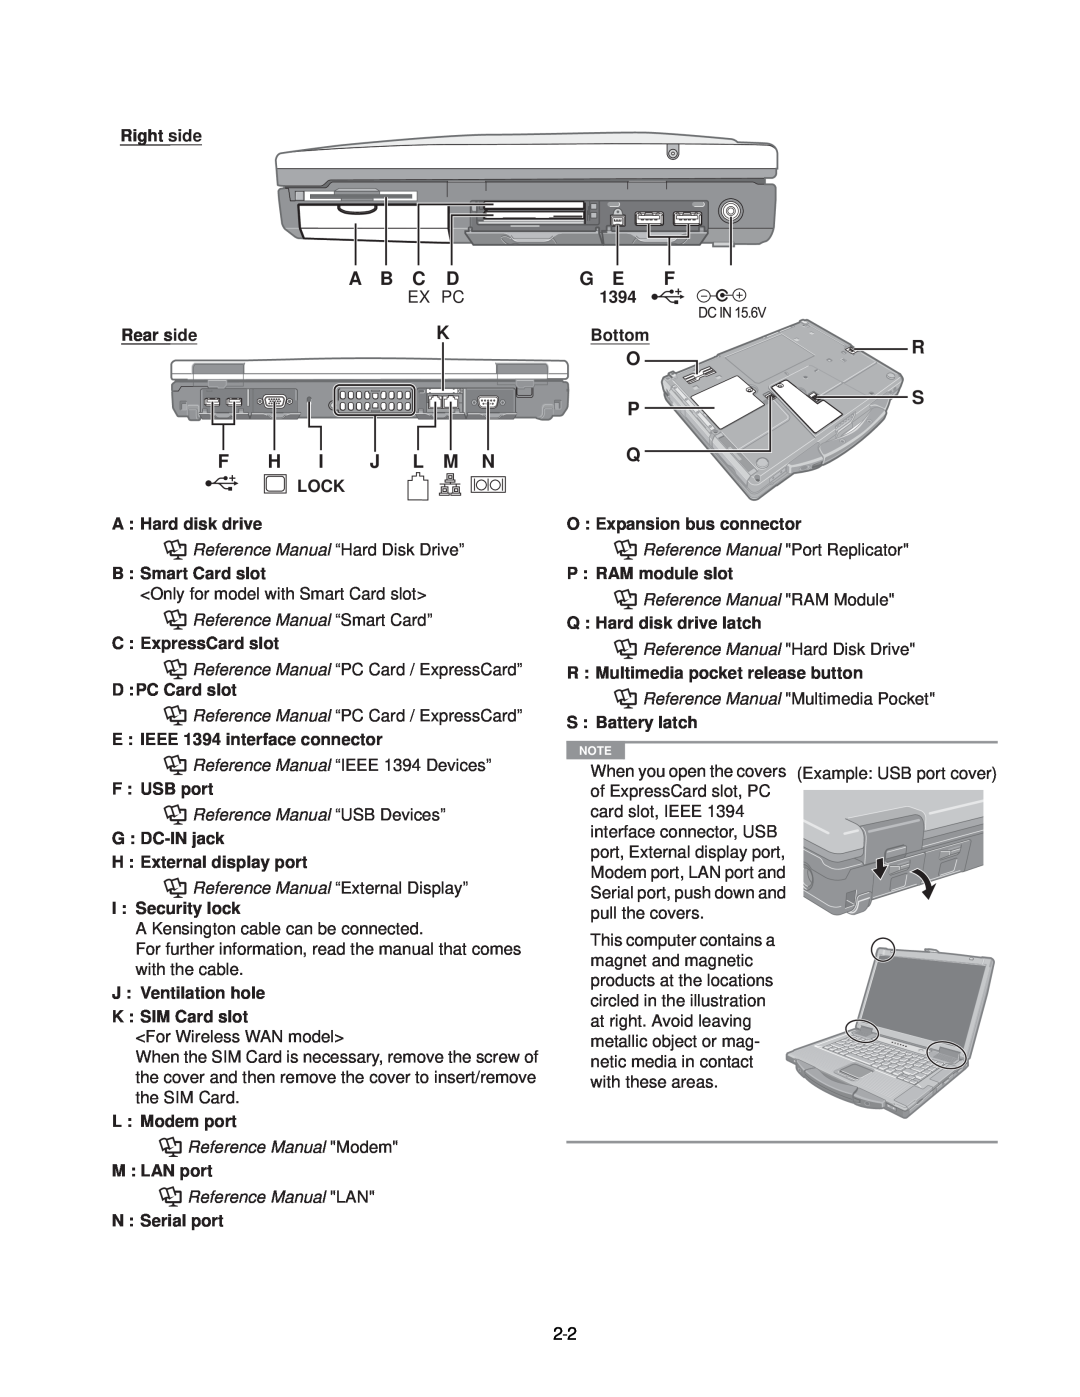 Panasonic CF-52EKM 1 D 2 M service manual A B C, F H I J L M N 